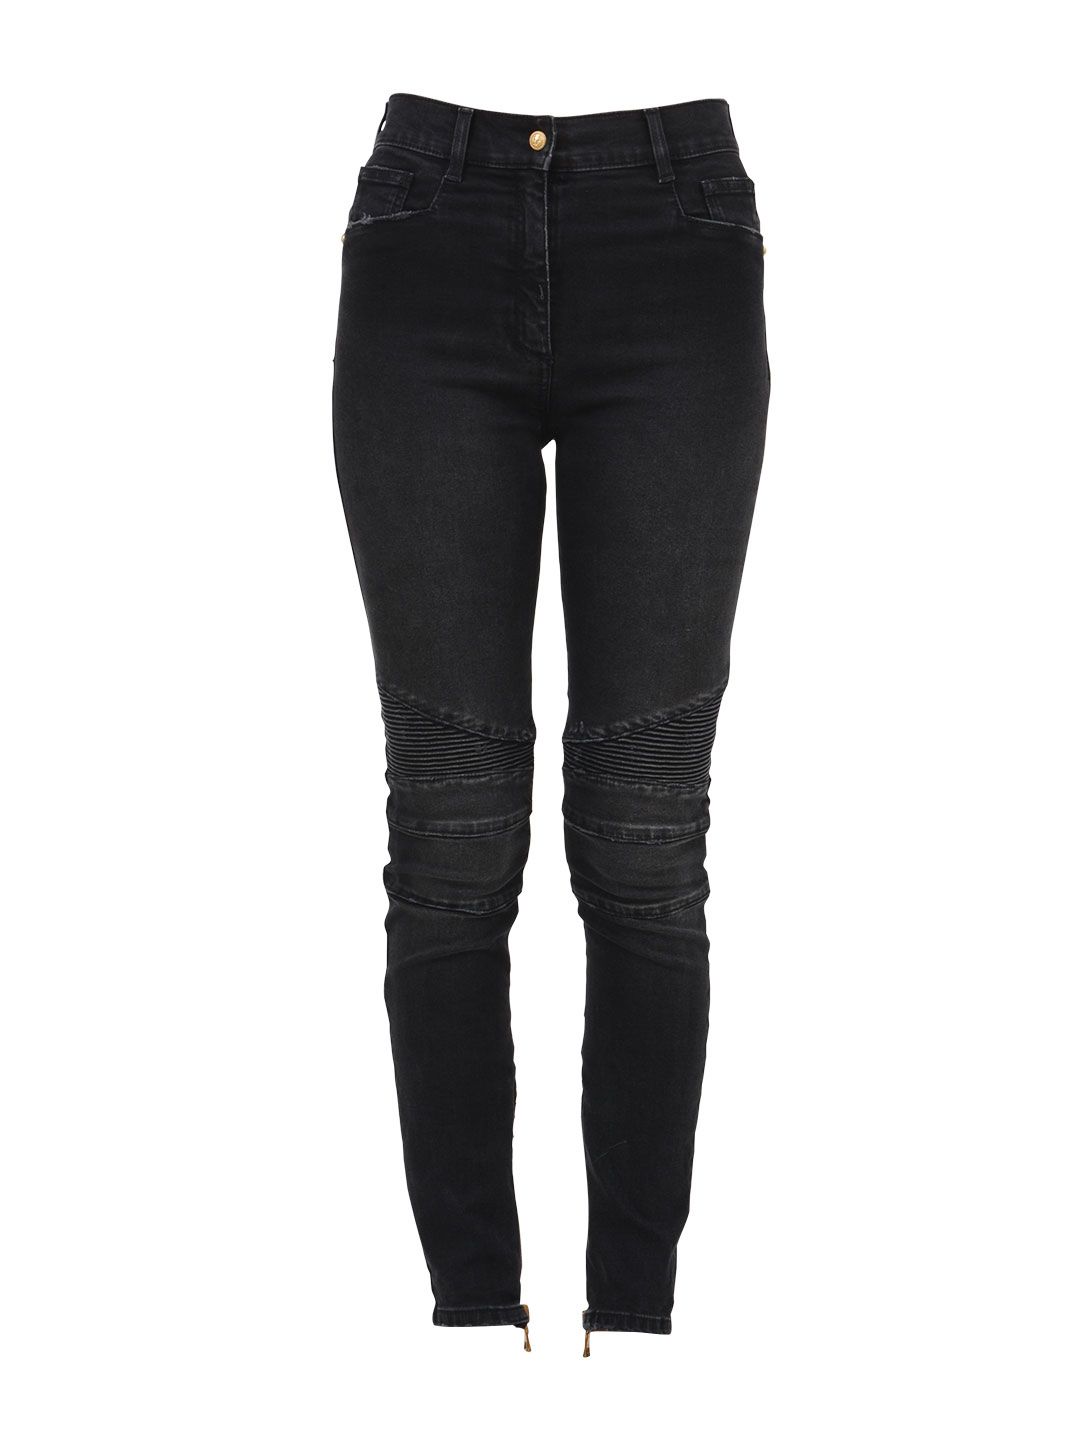 Balmain - Balmain Black Skinny Biker Jeans - Black, Women's Jeans | Italist